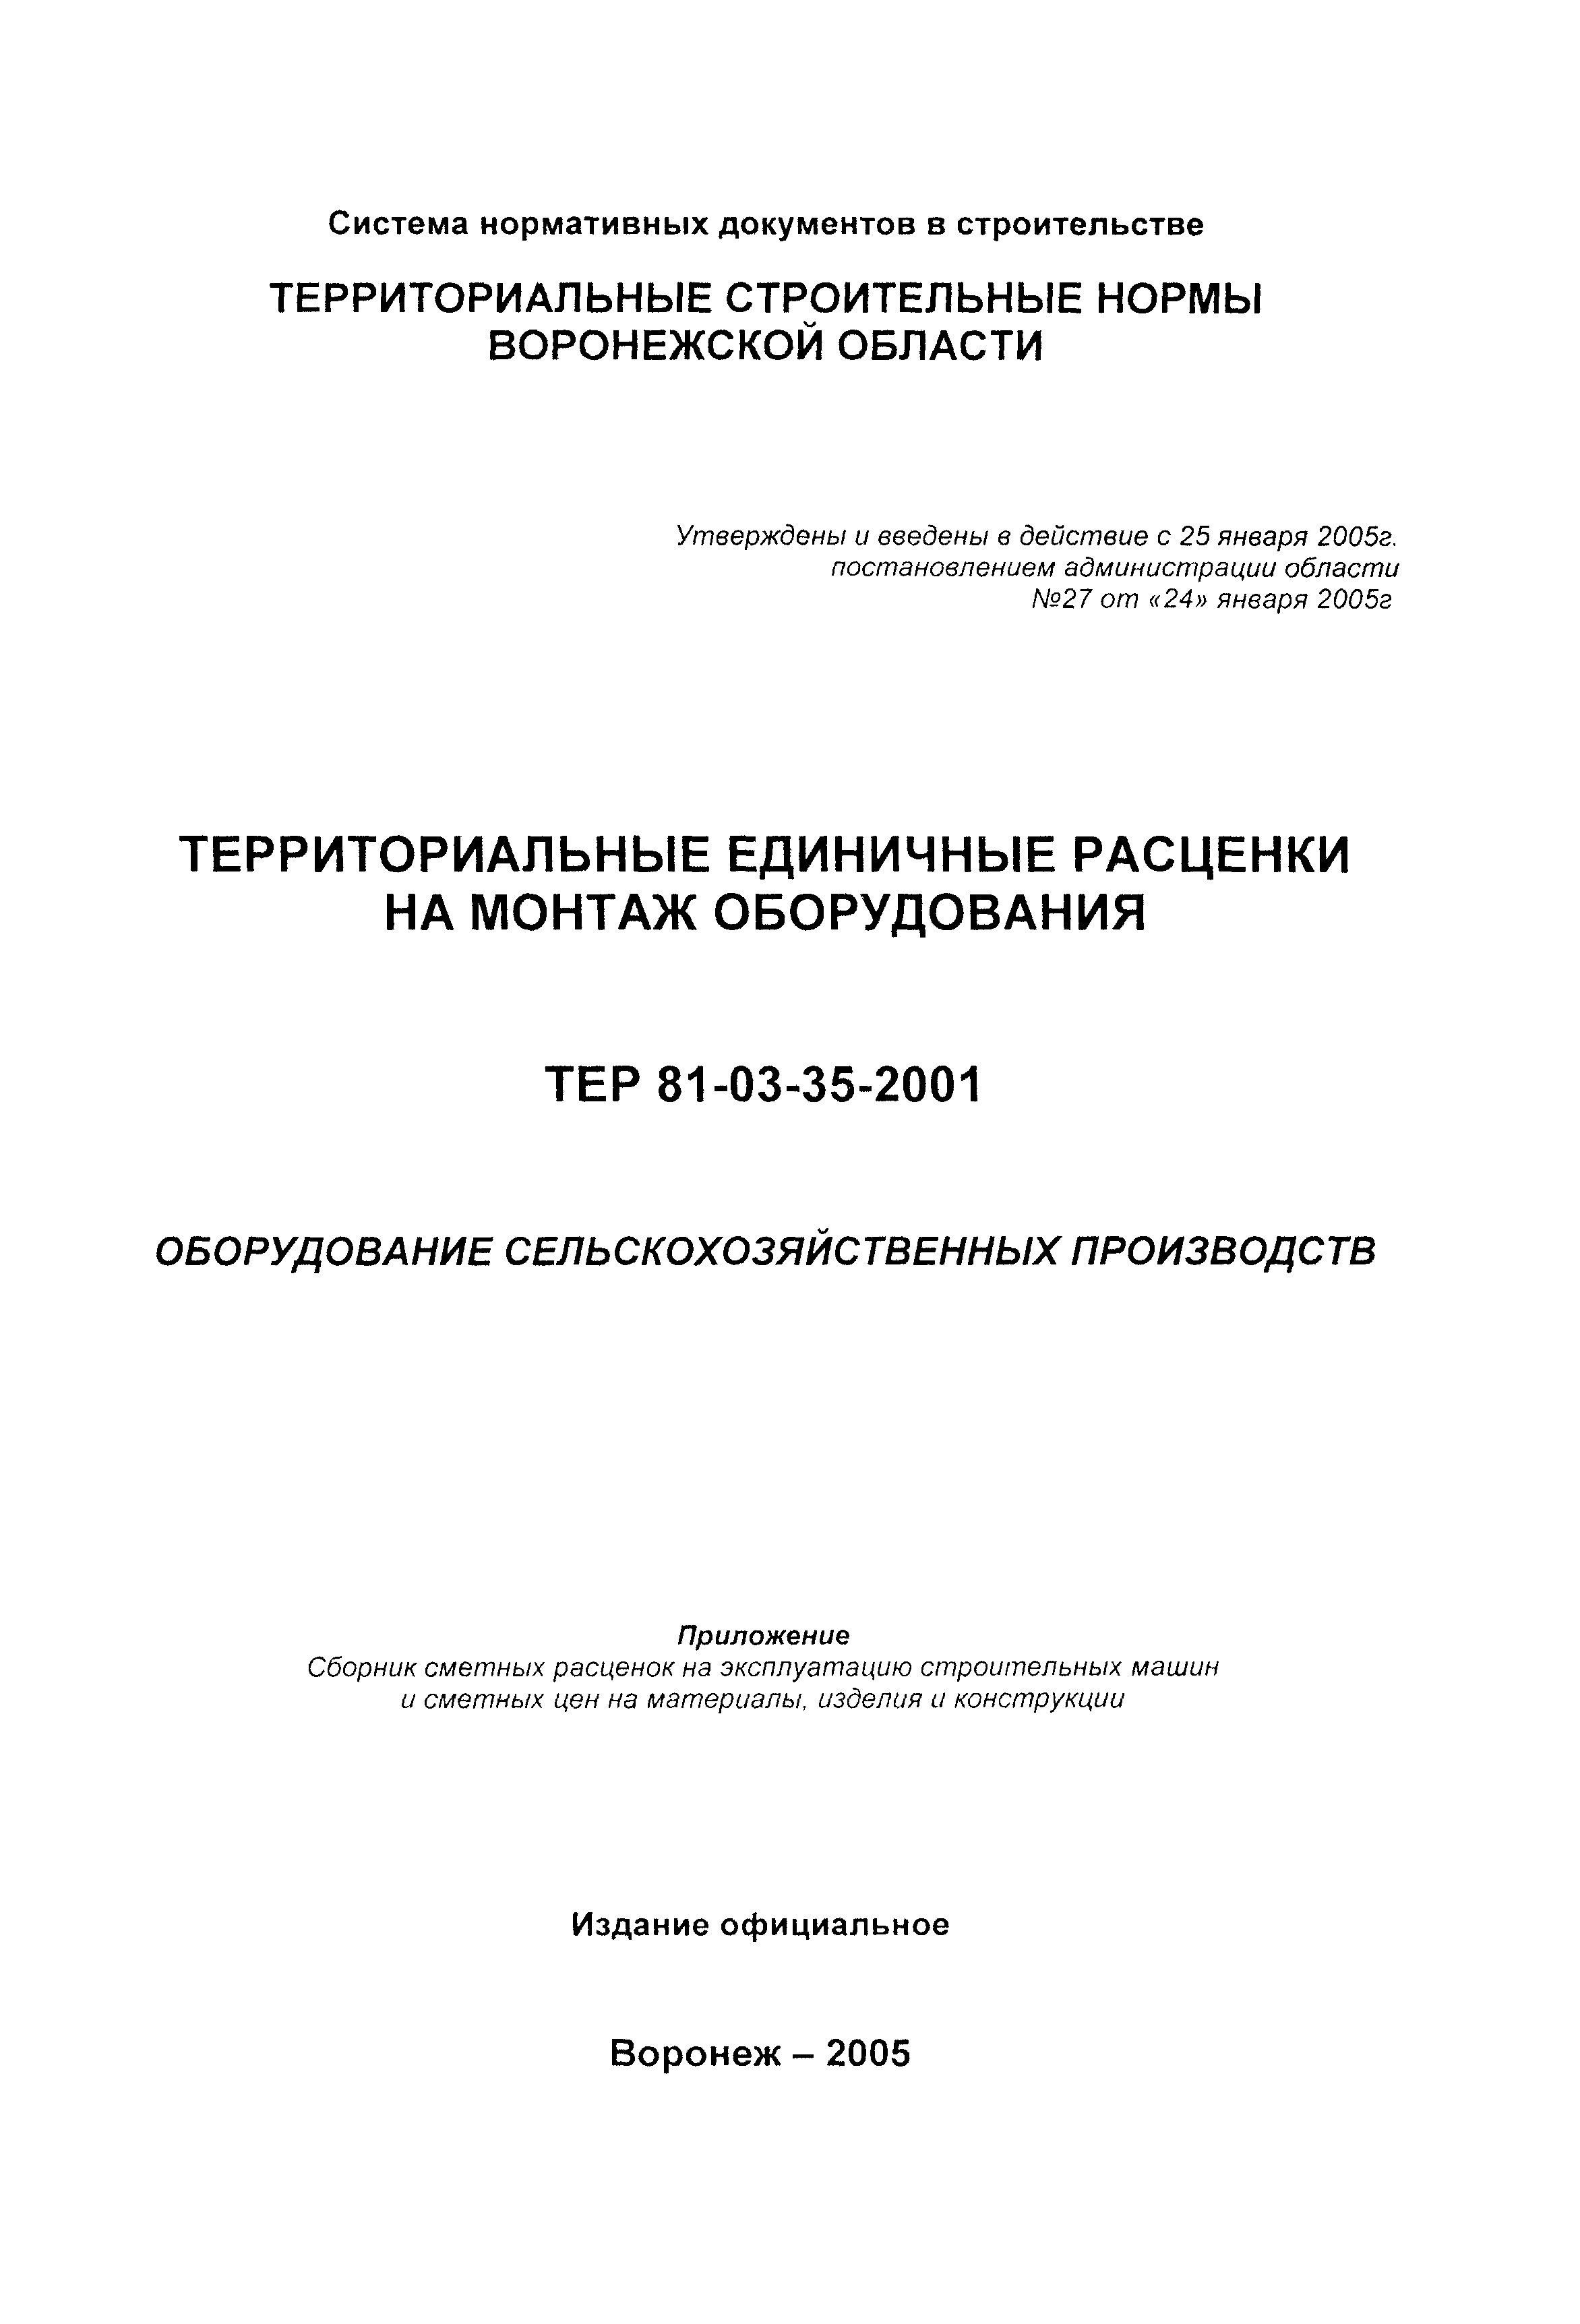 ТЕРм Воронежской области 81-03-35-2001